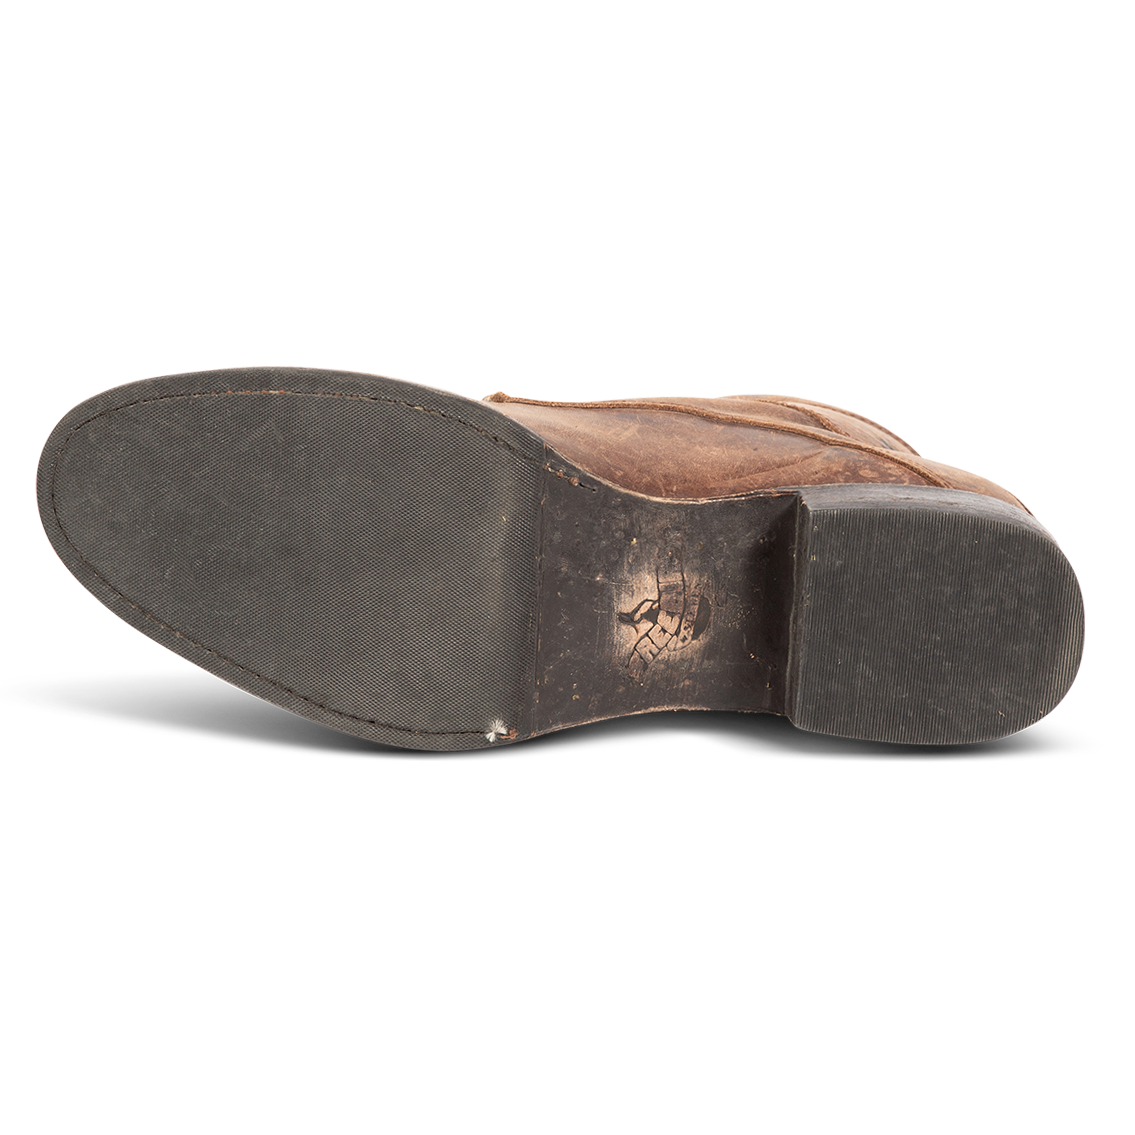 Leather sole on FREEBIRD men's Mercr brown shoe